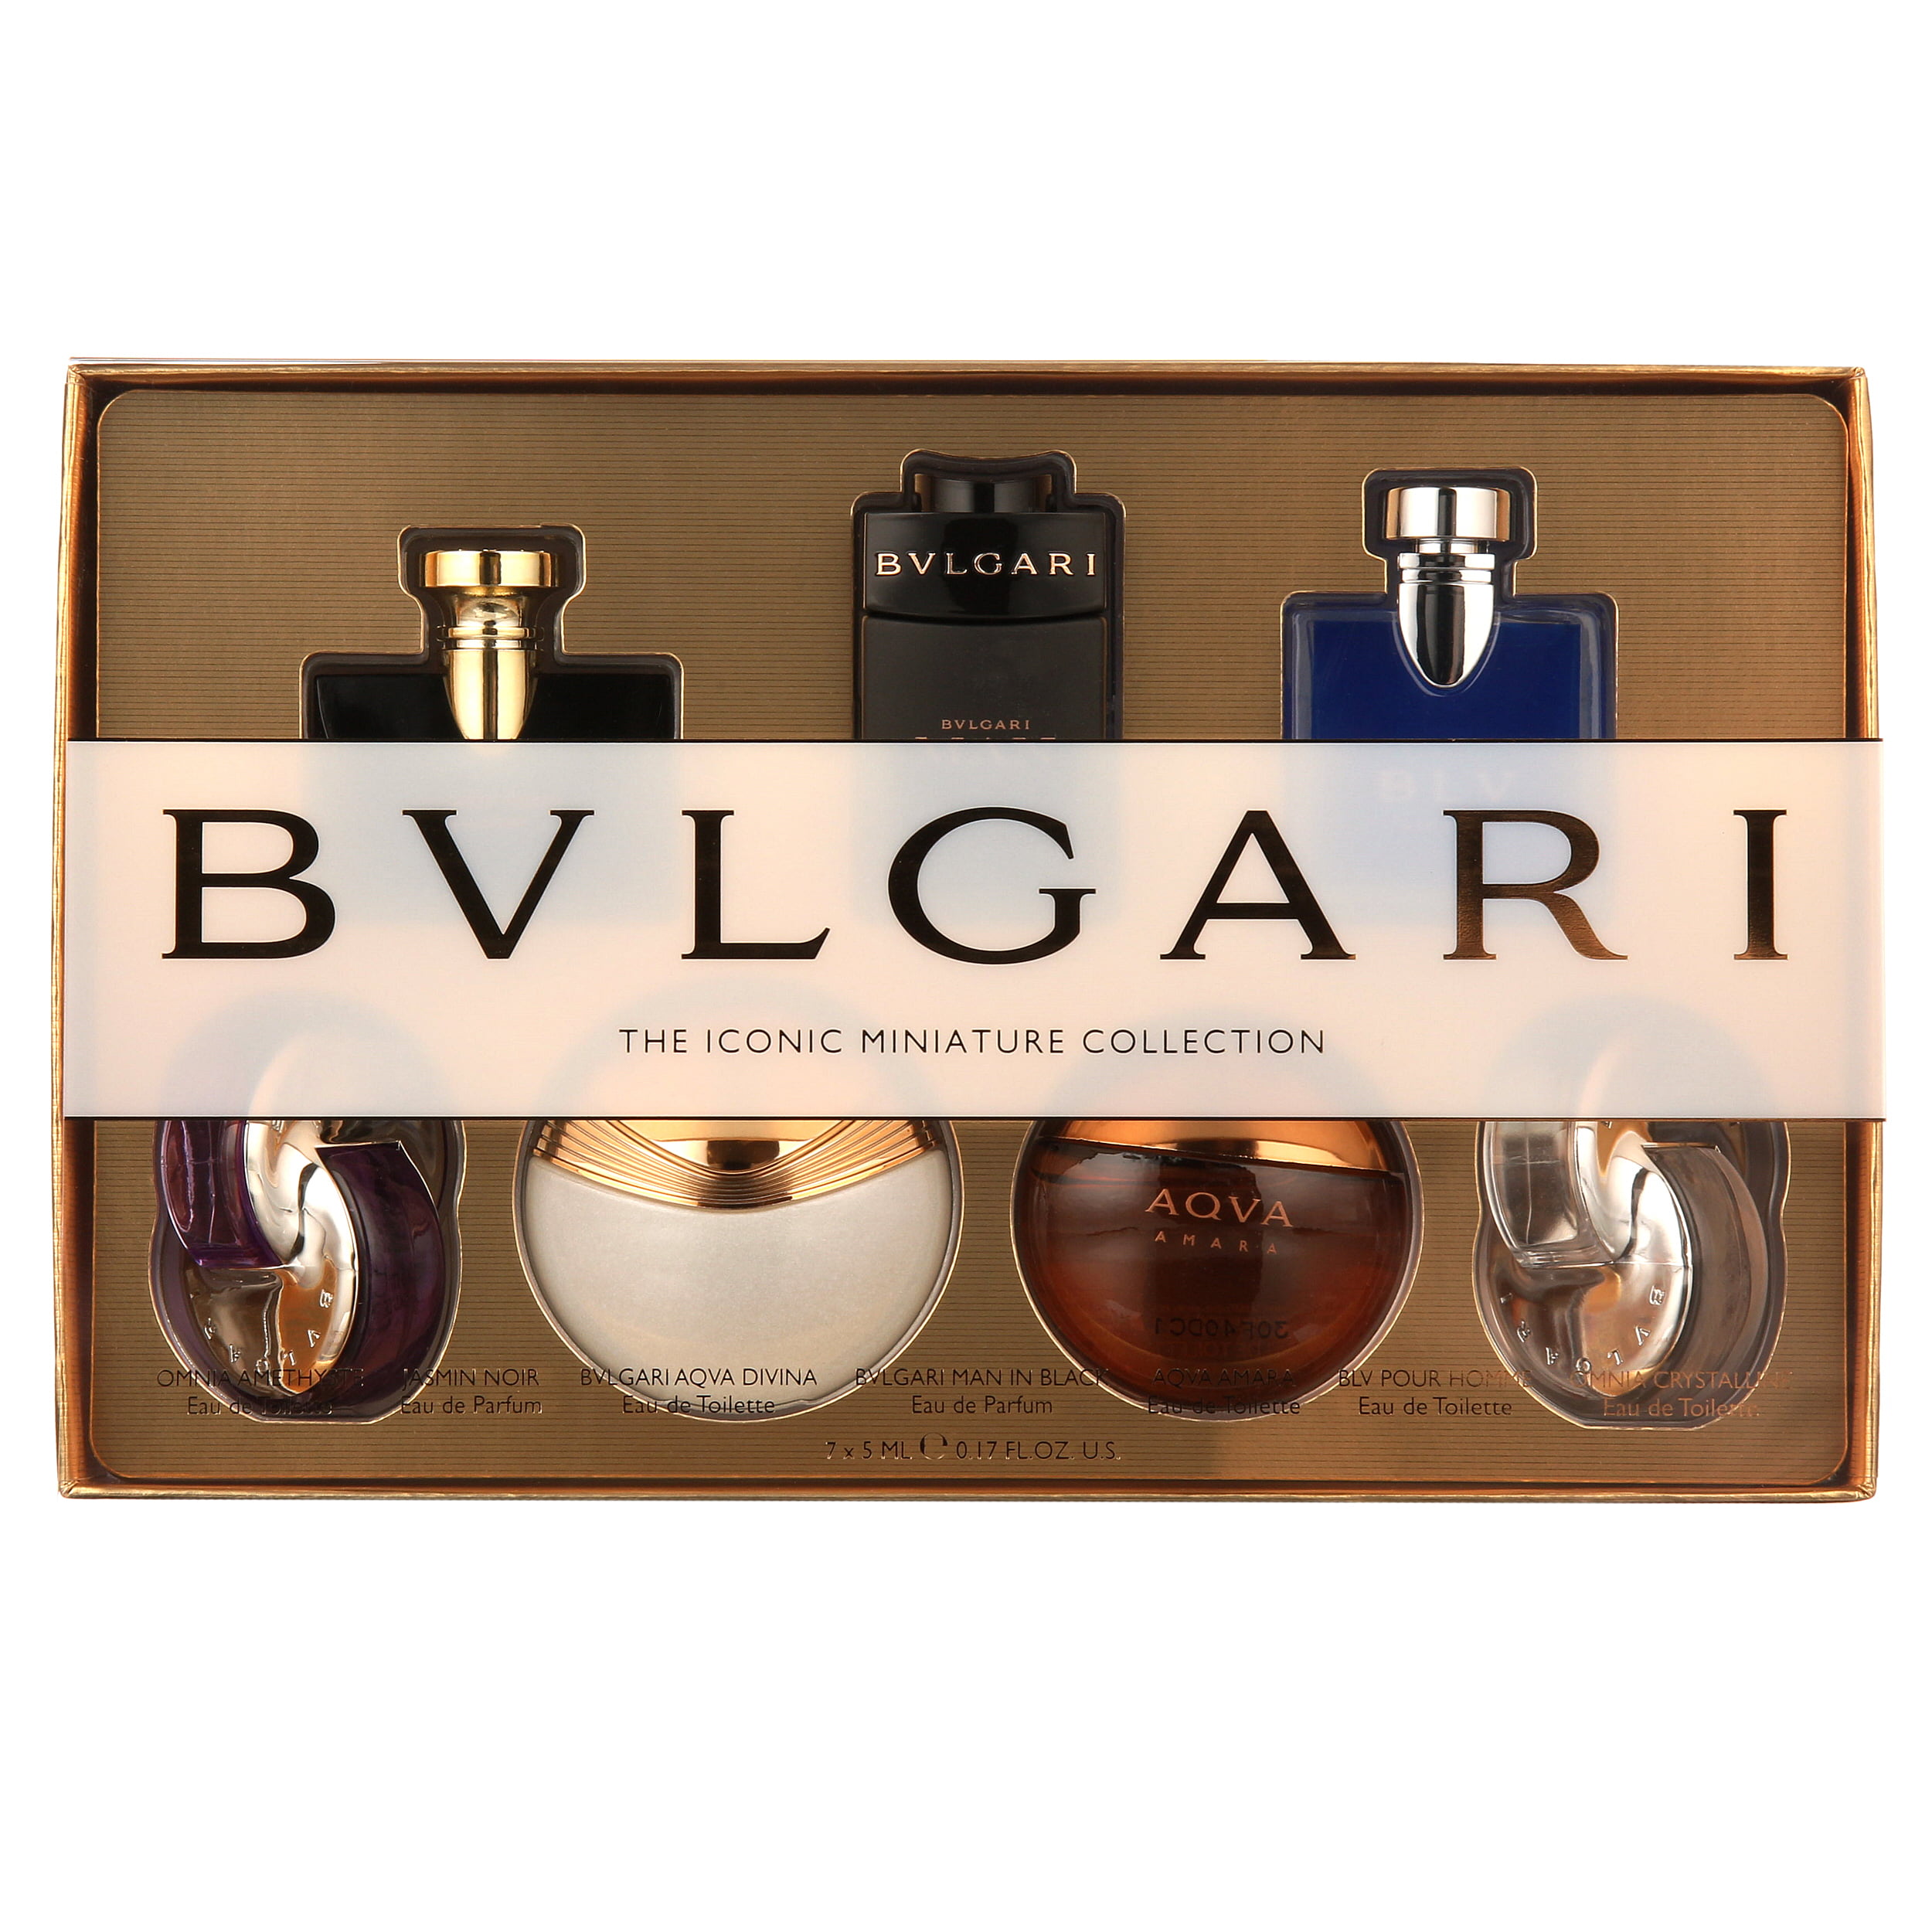 Bvlgari - Bvlgari The Iconic Miniature Collection 6 Piece Fragrance